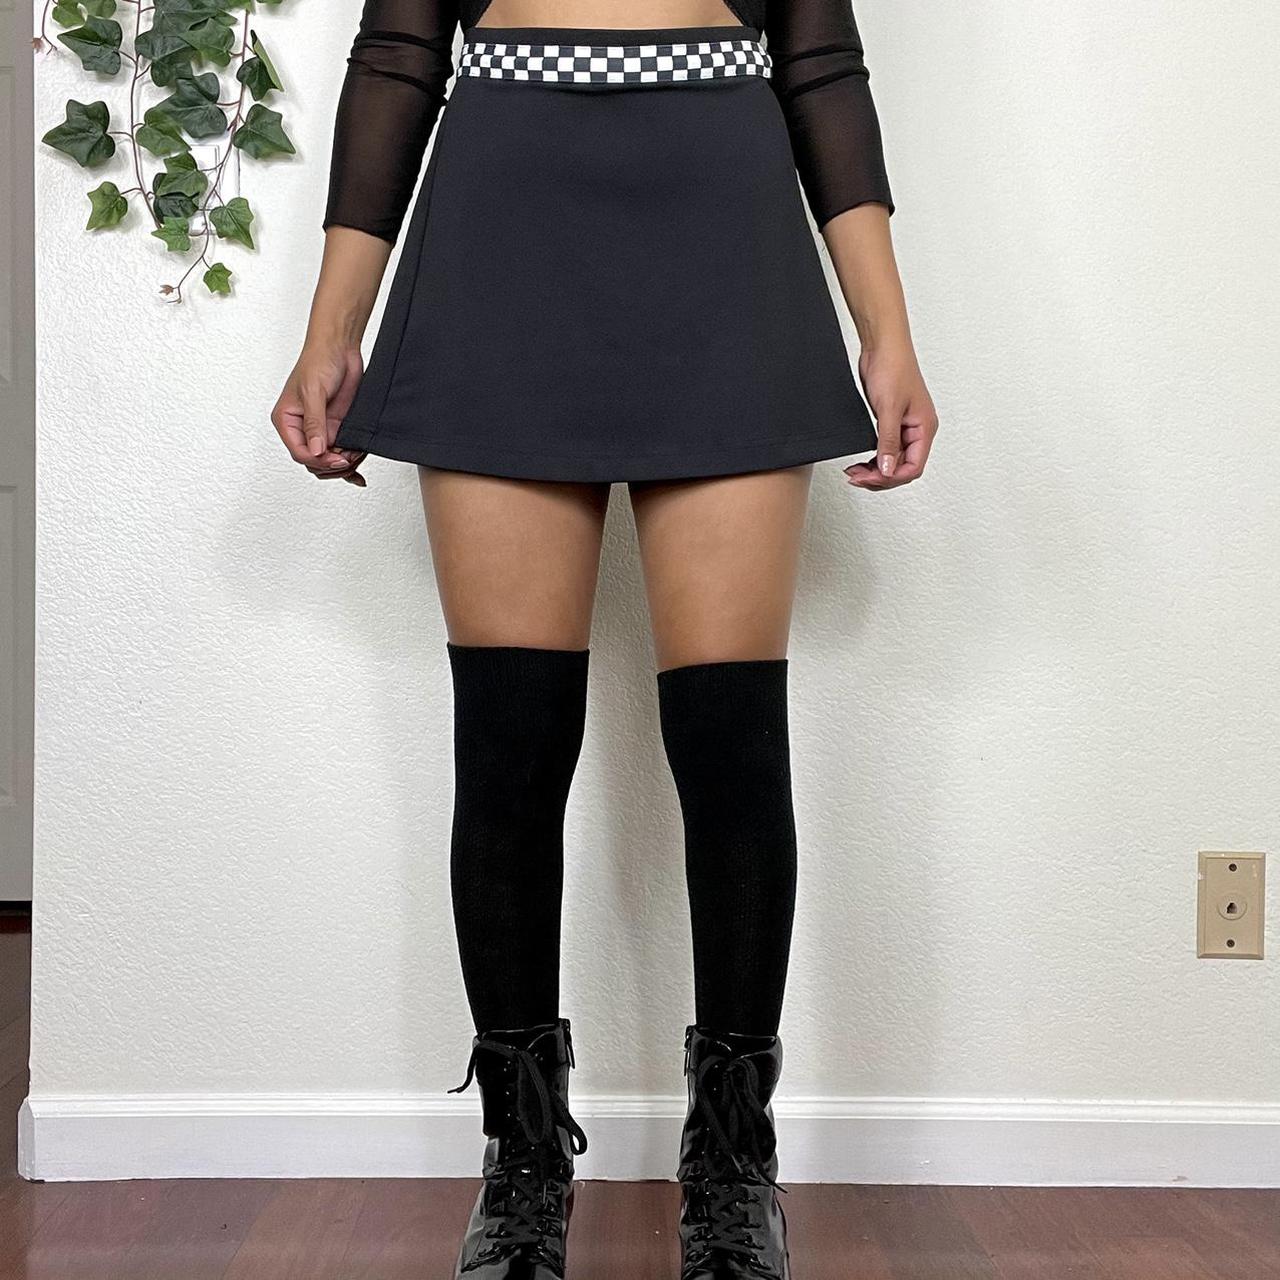 Product Image 3 - 90s ultra mini skirt 🎱

Beautiful